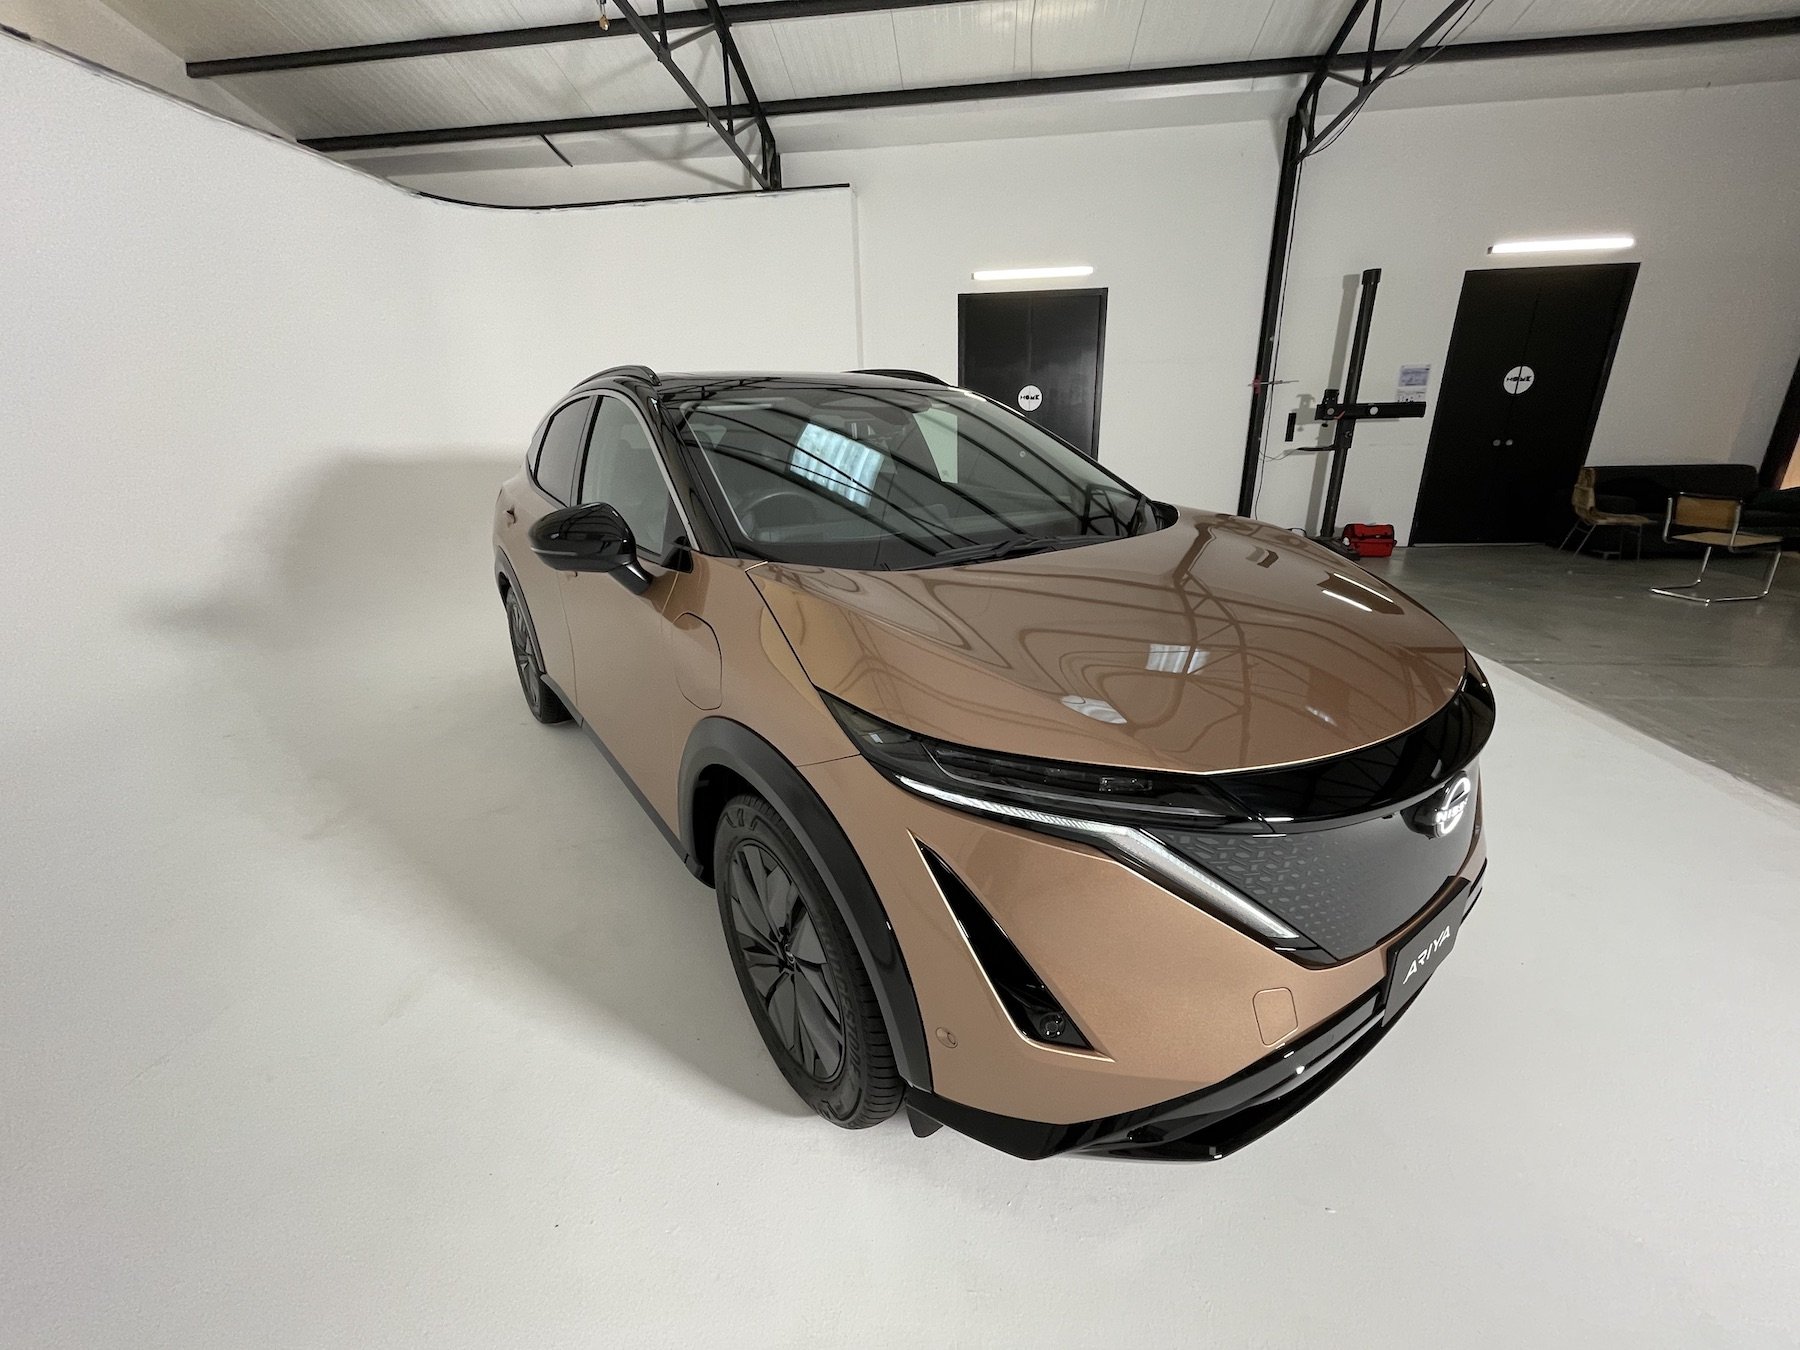 PHOTOS - Premier contact avec le Nissan Ariya (2021), rival du Tesla Model Y